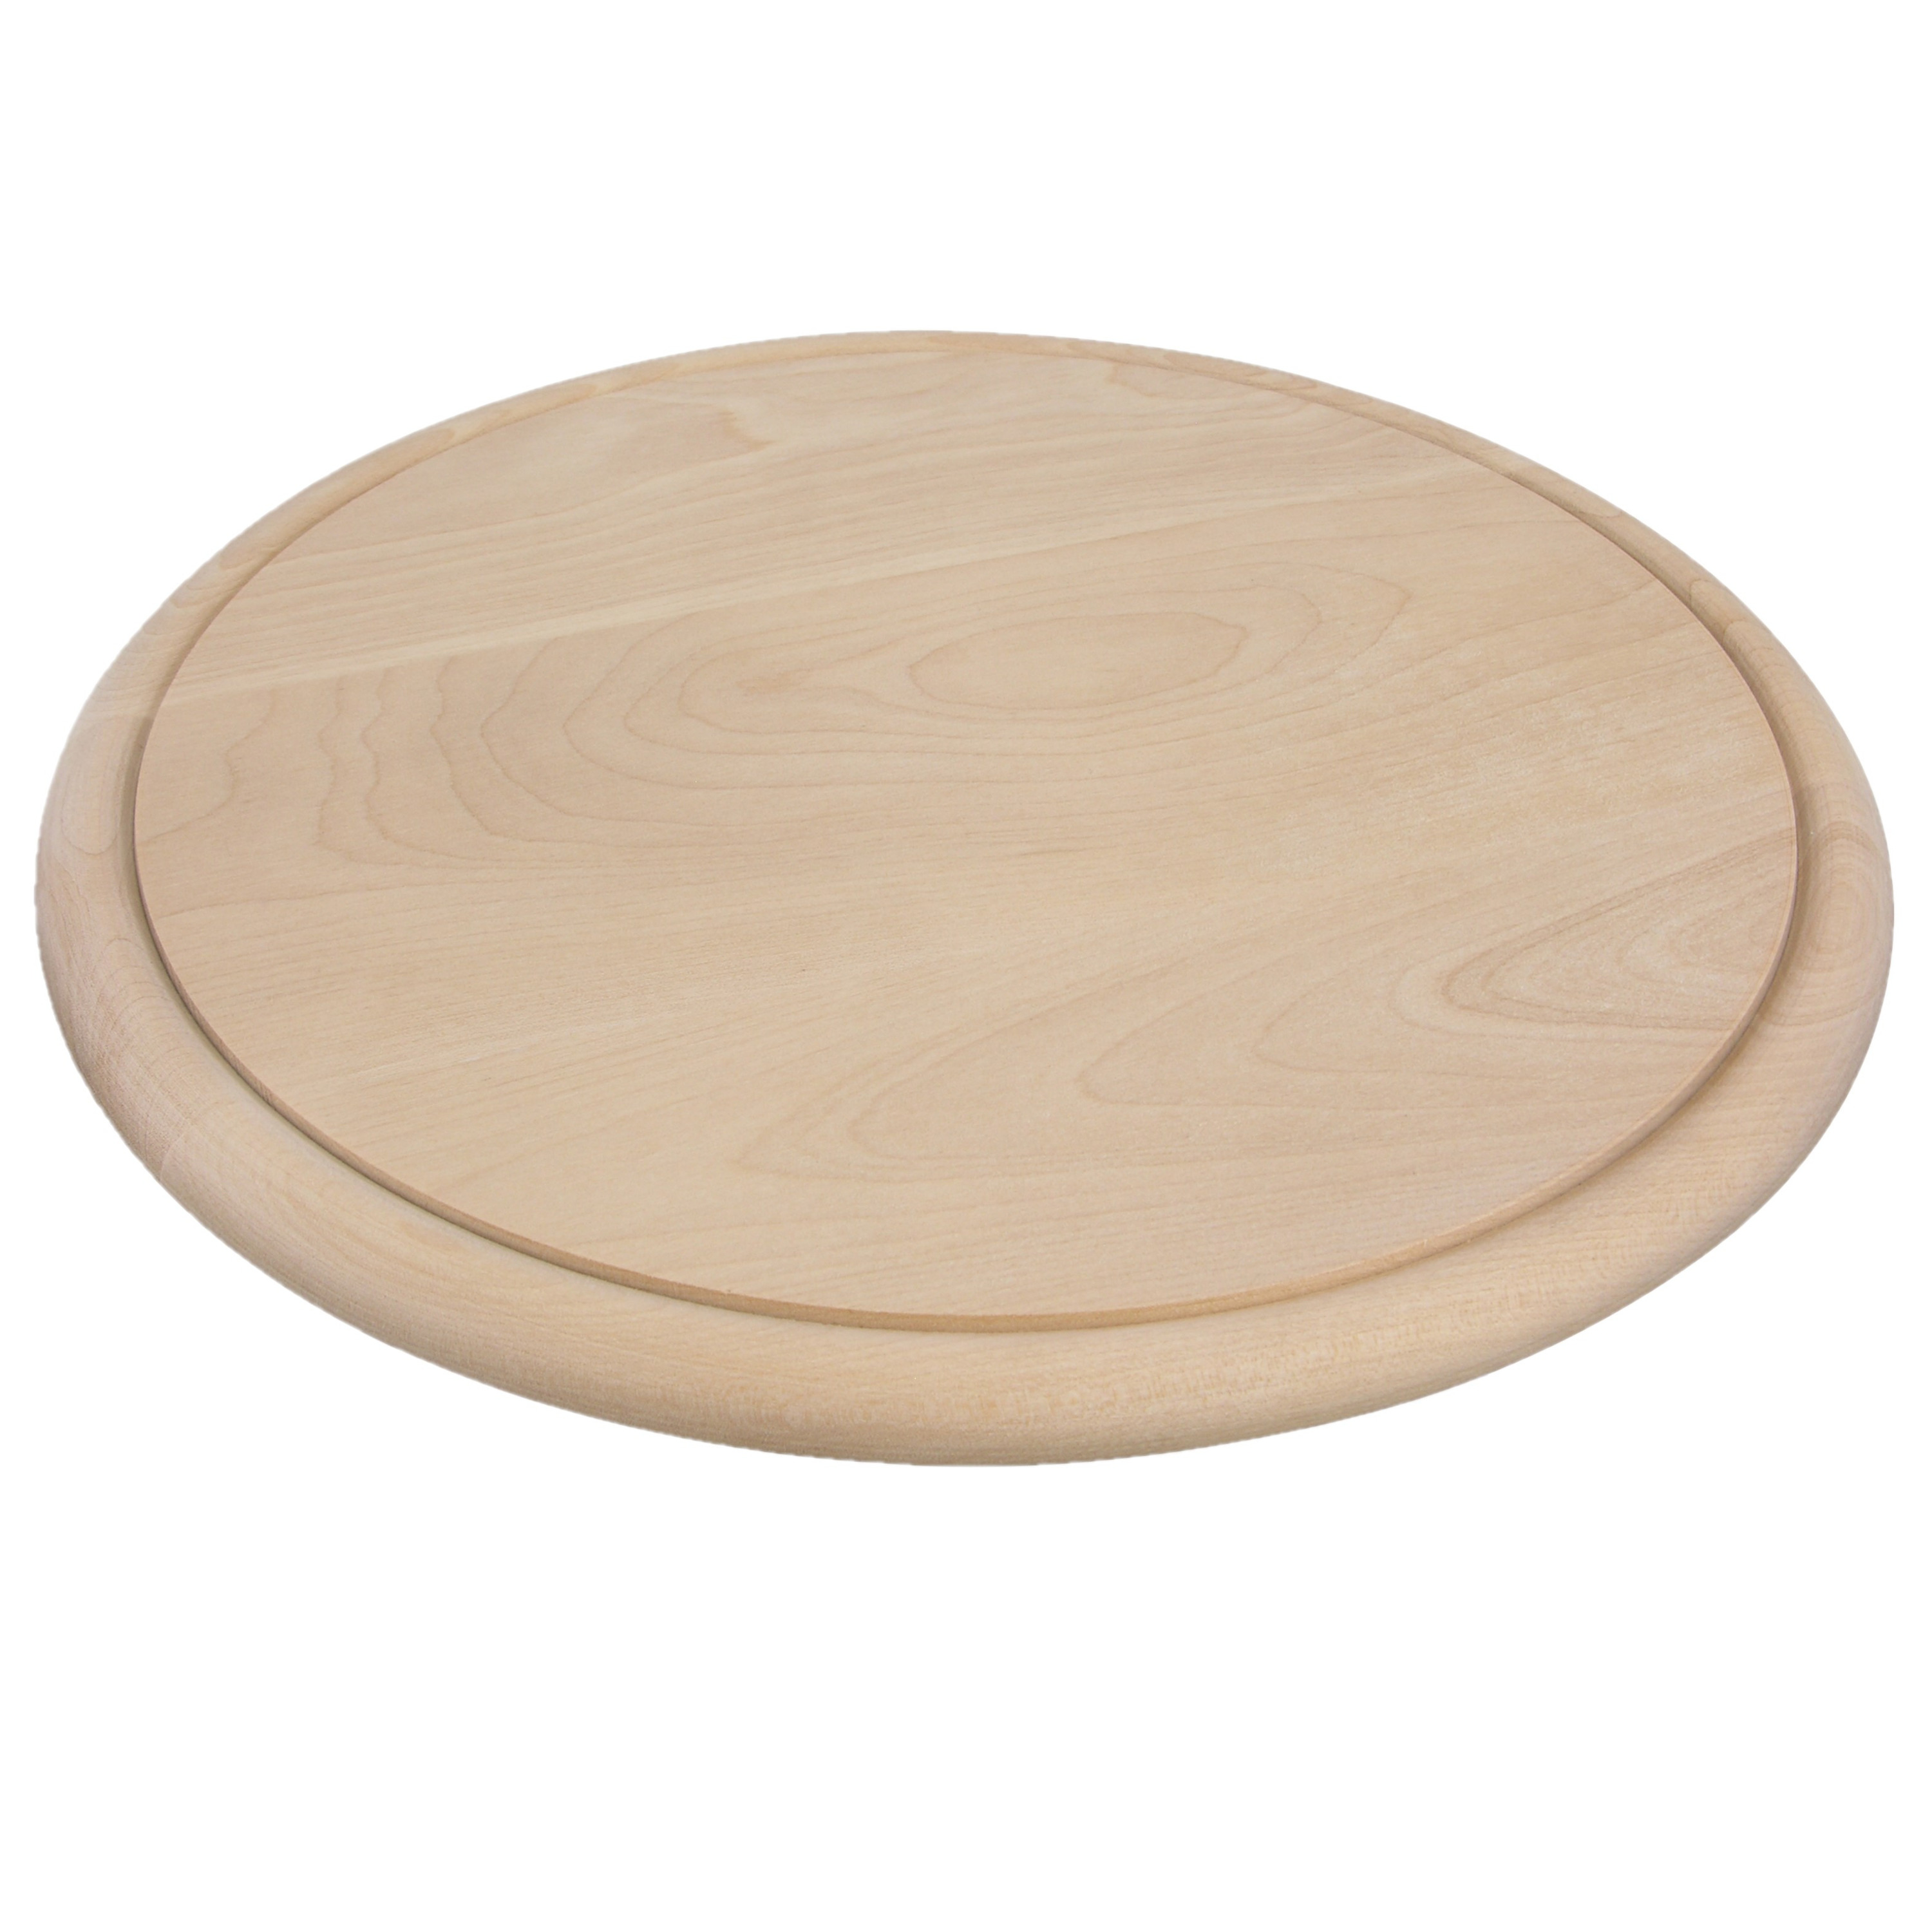 Ronde houten ham plankjes-broodplank-serveer plank 25 cm